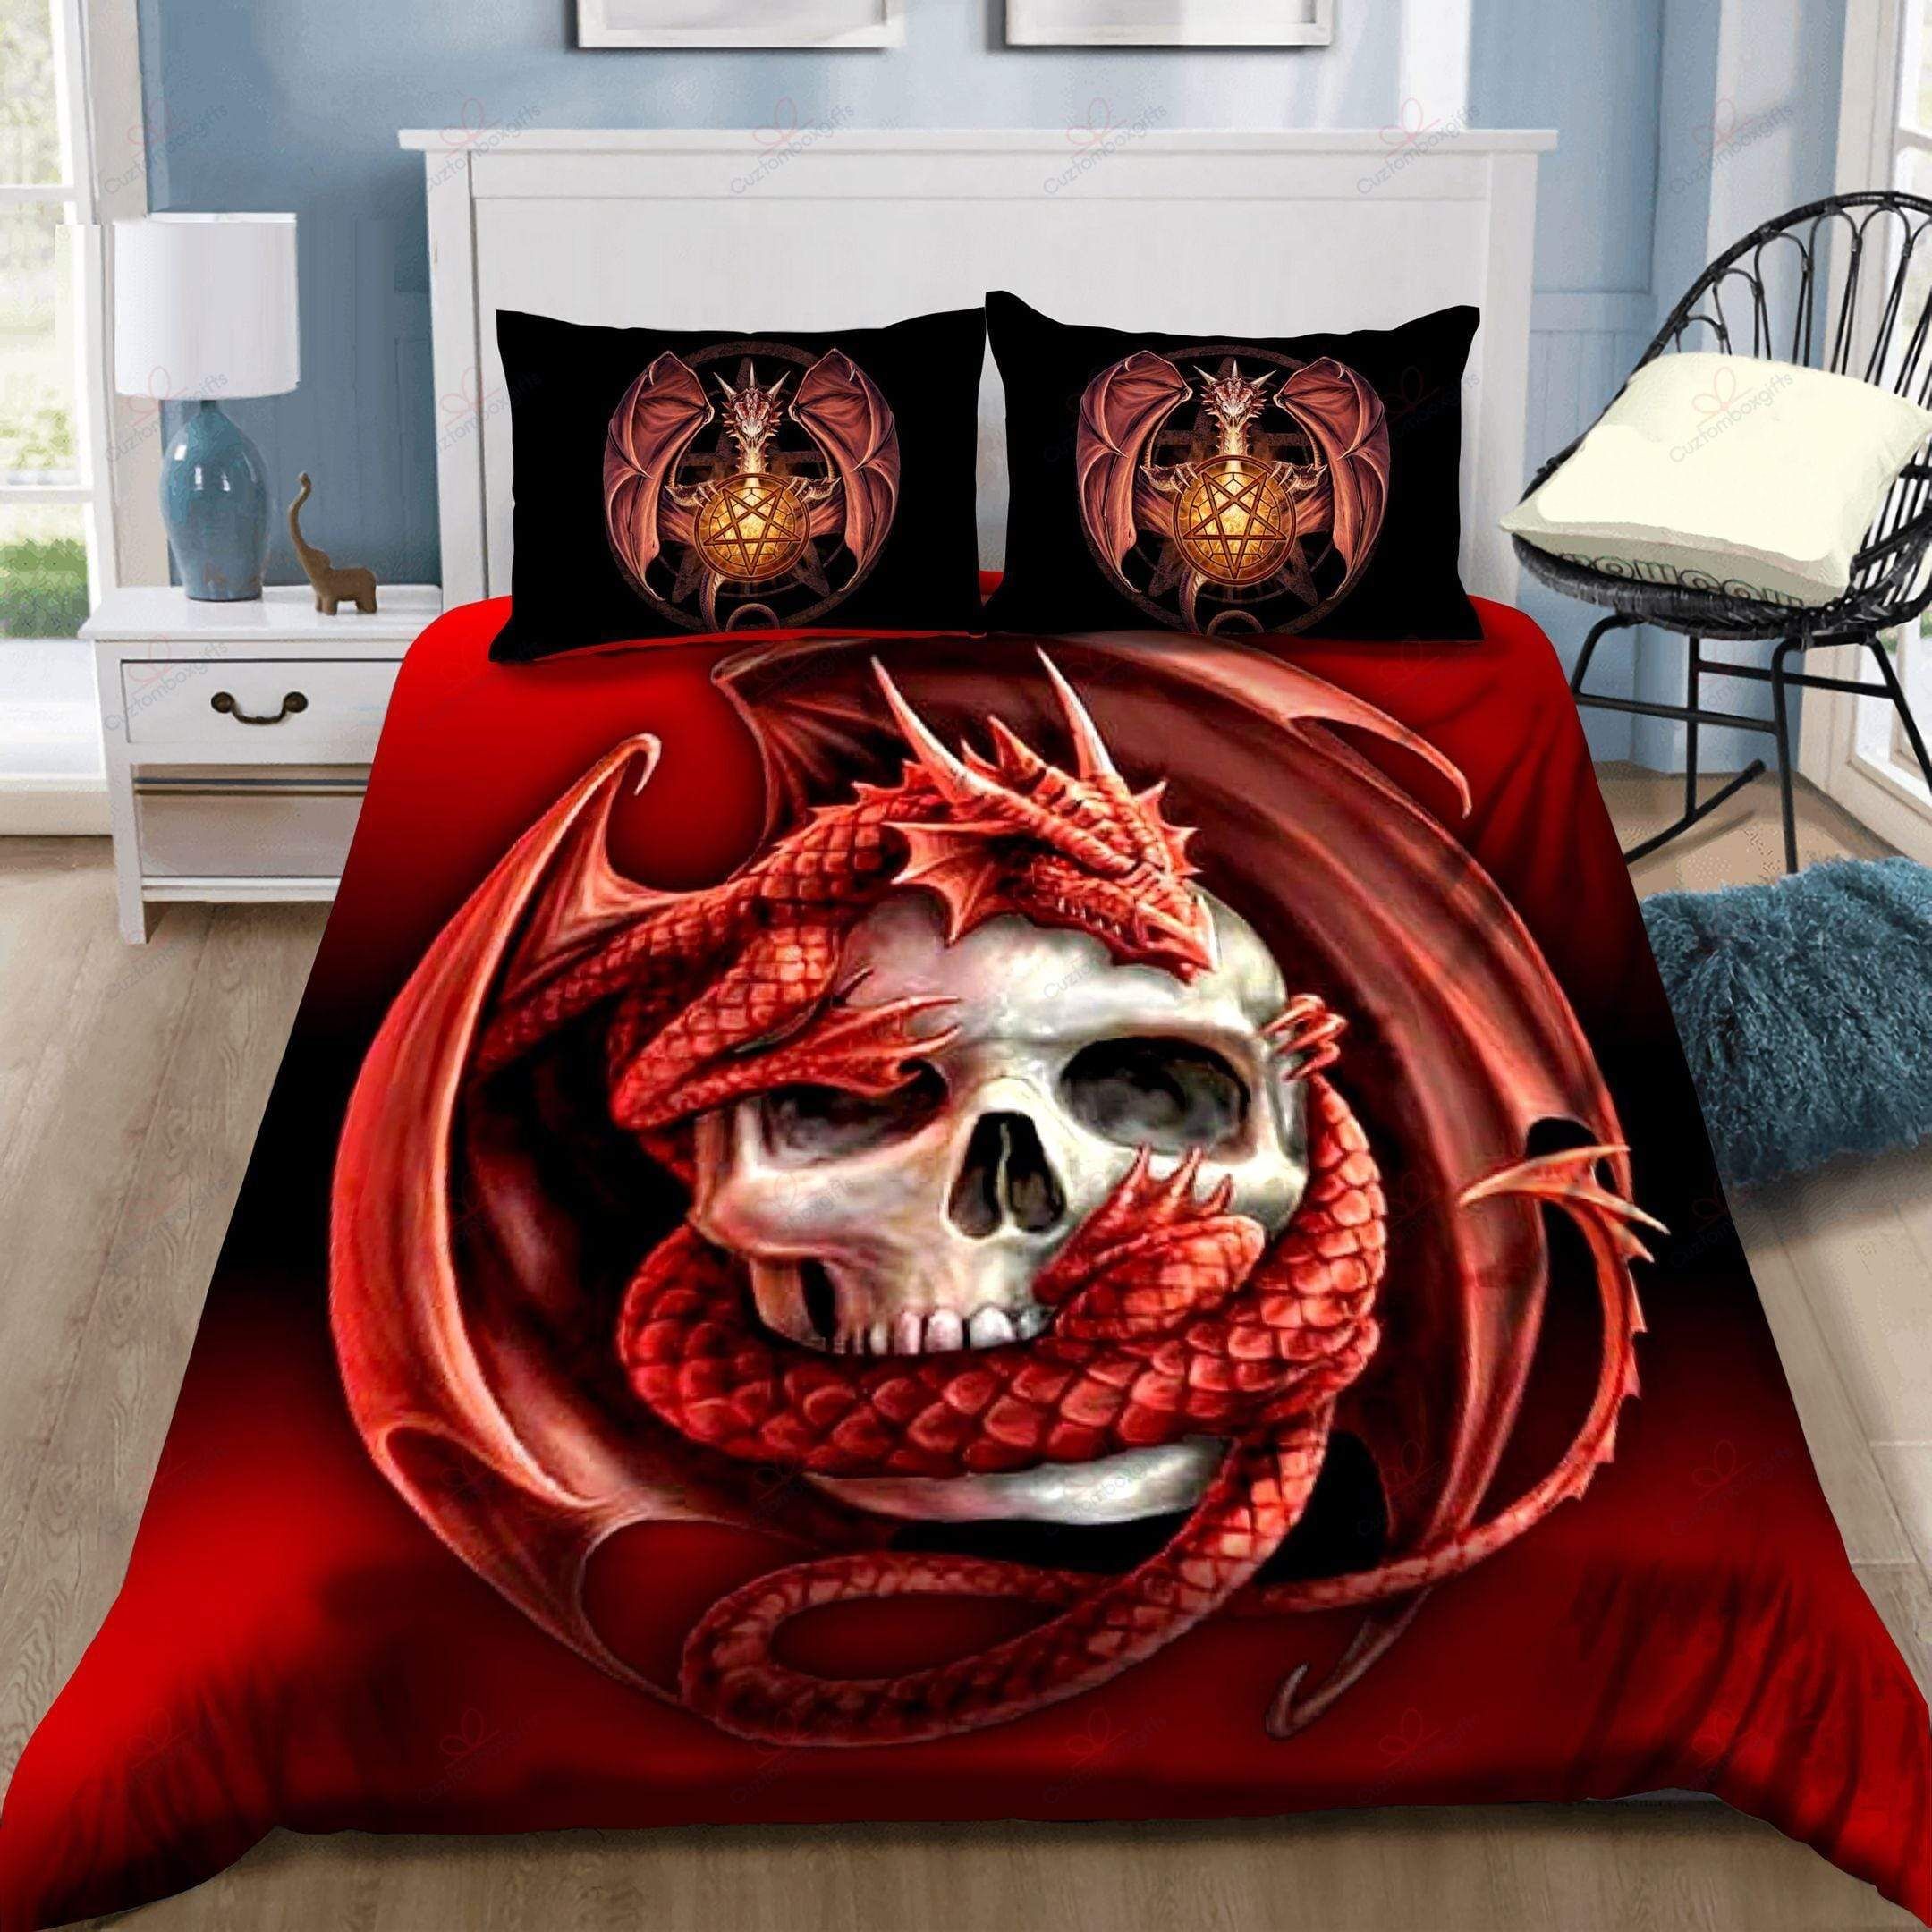 Red Dragon With Skull Duvet Cover Bedding Set